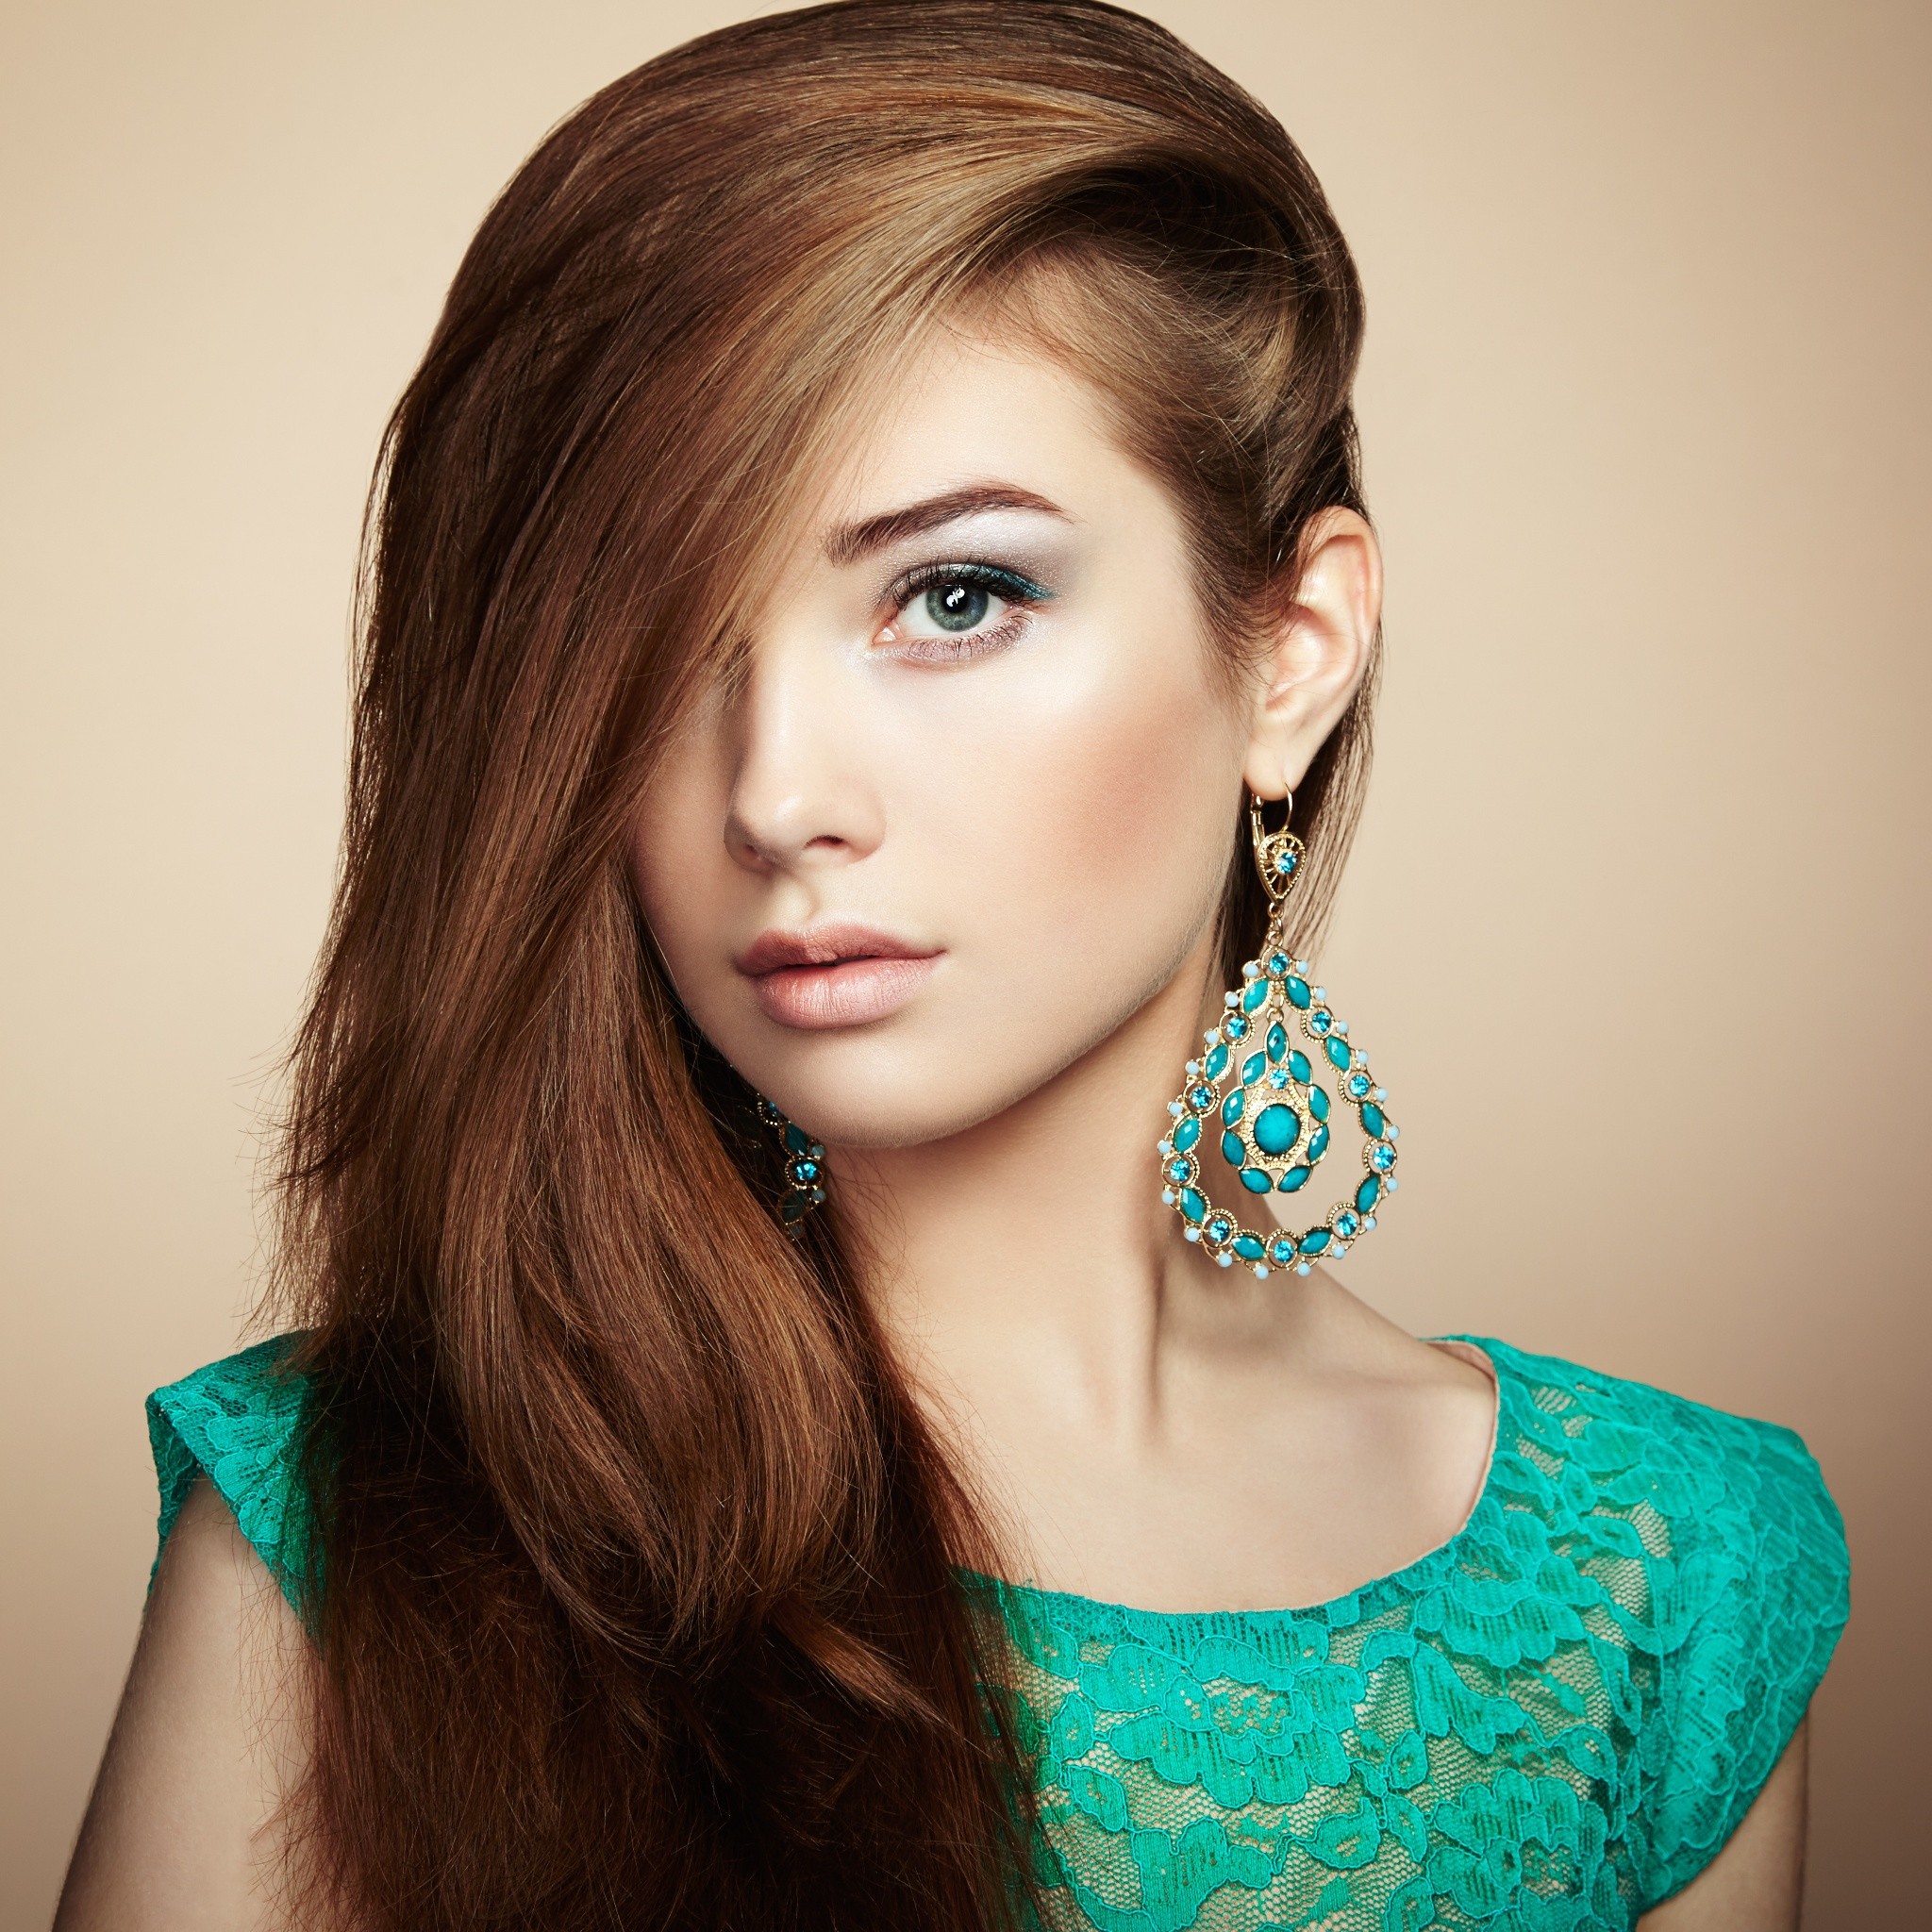 Portrait Face Women Brunette Oleg Gekman Redhead Portrait Display Green Top Blue Eyes Long Hair Look 2048x2048